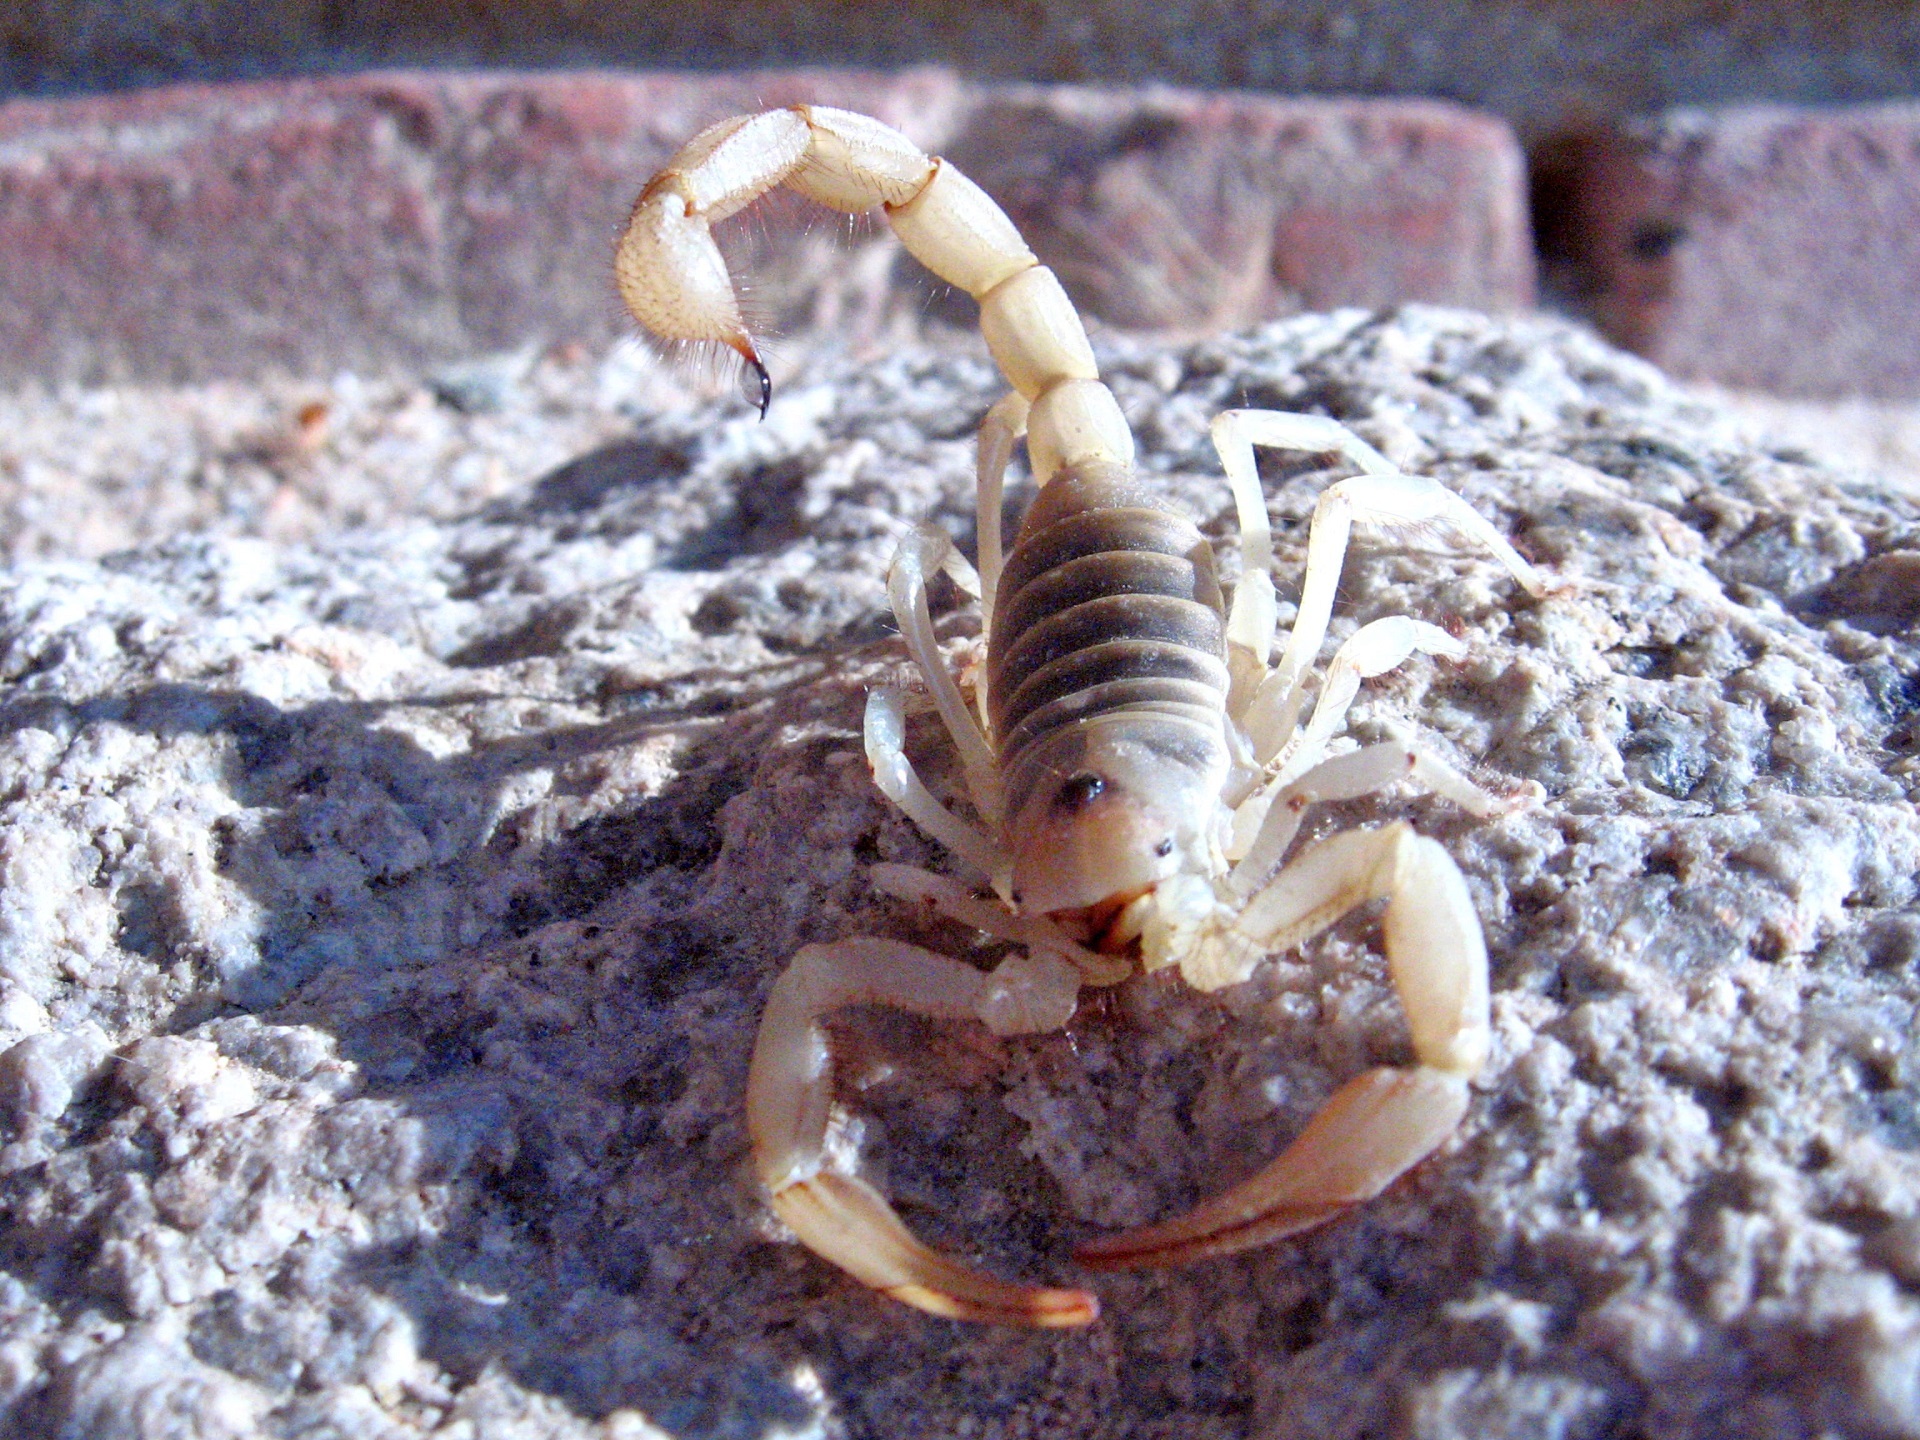 Giant hairy scorpion photo